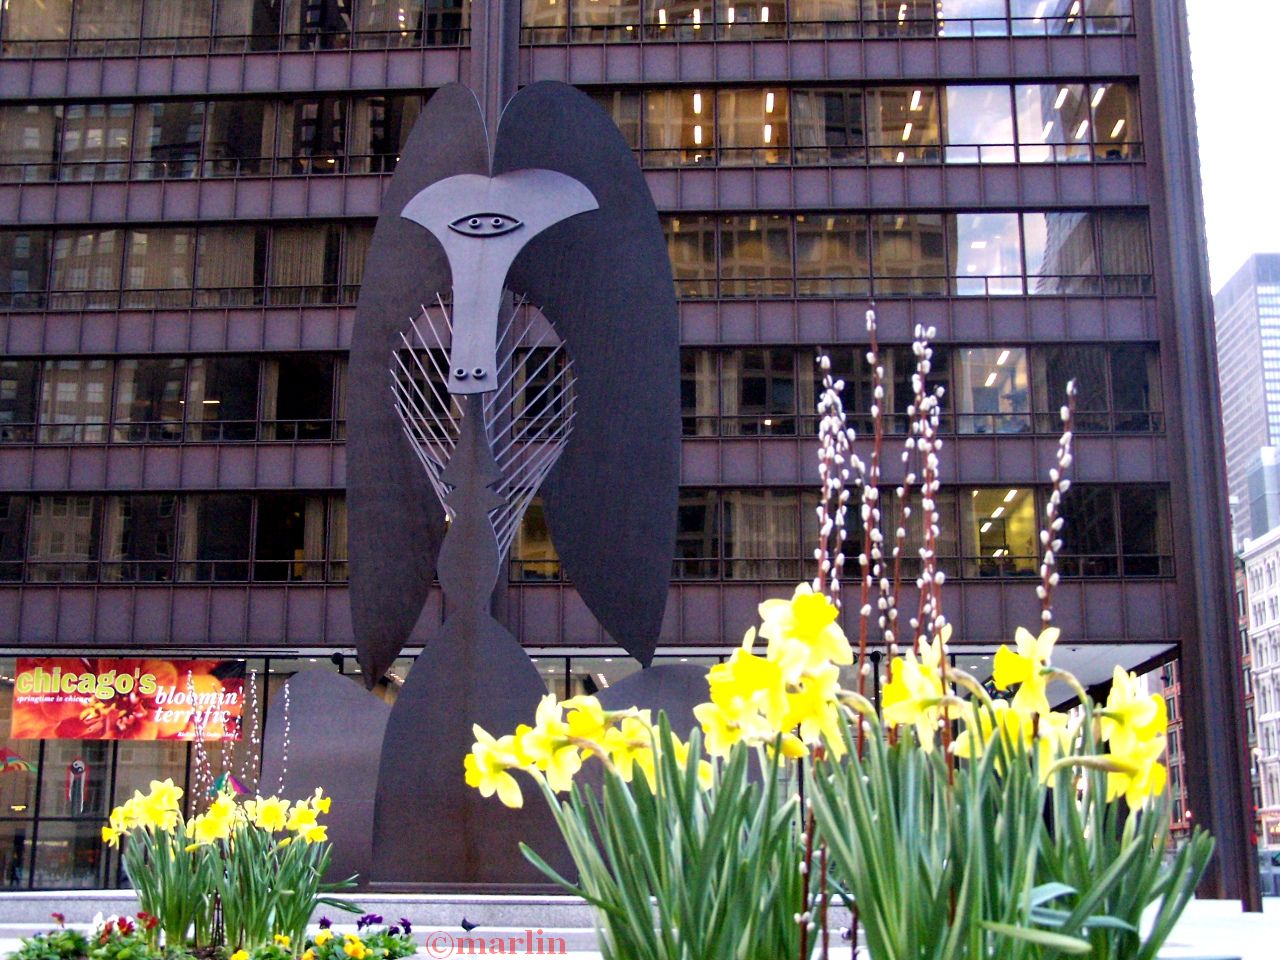 Chicago's Picasso Sculpture